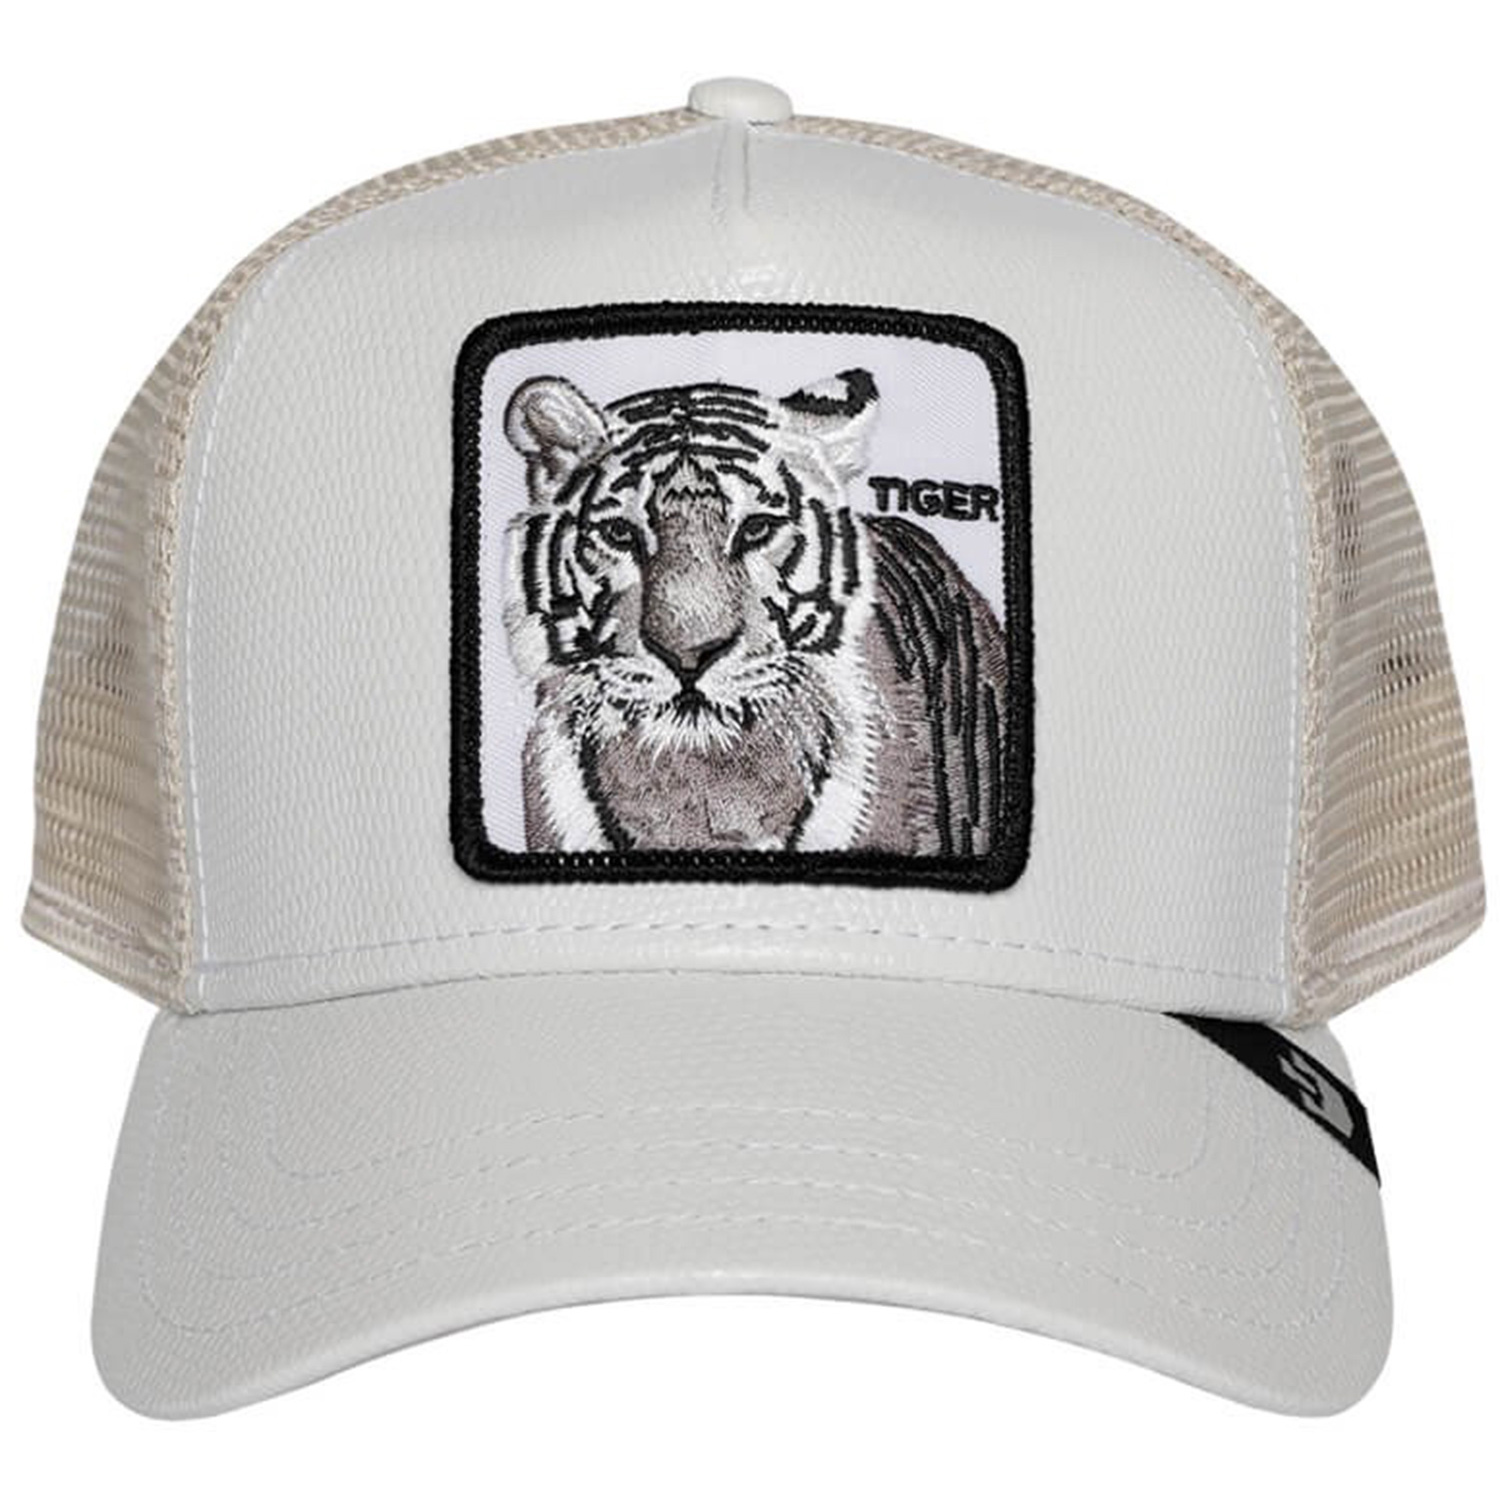 Goorin Bros Killer Tiger Beyaz Şapka (101-0606-STN)